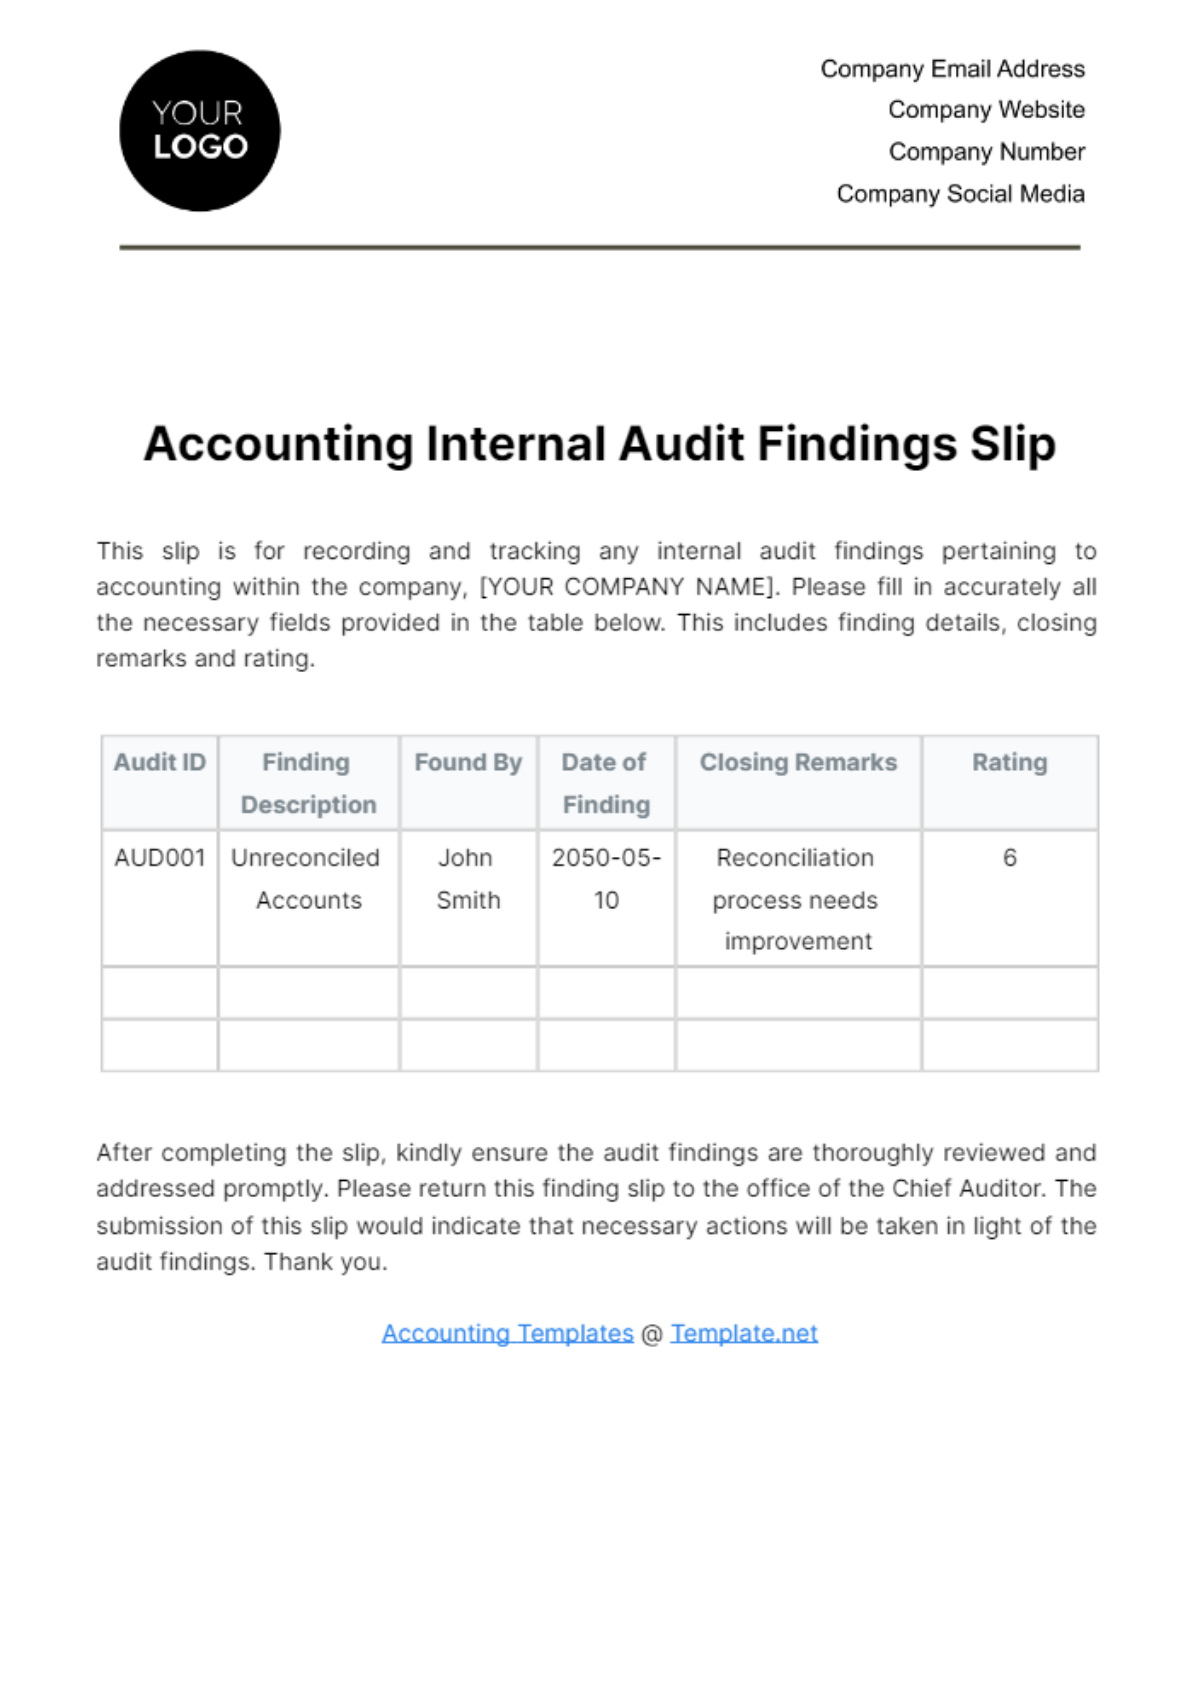 Accounting Internal Audit Findings Slip Template